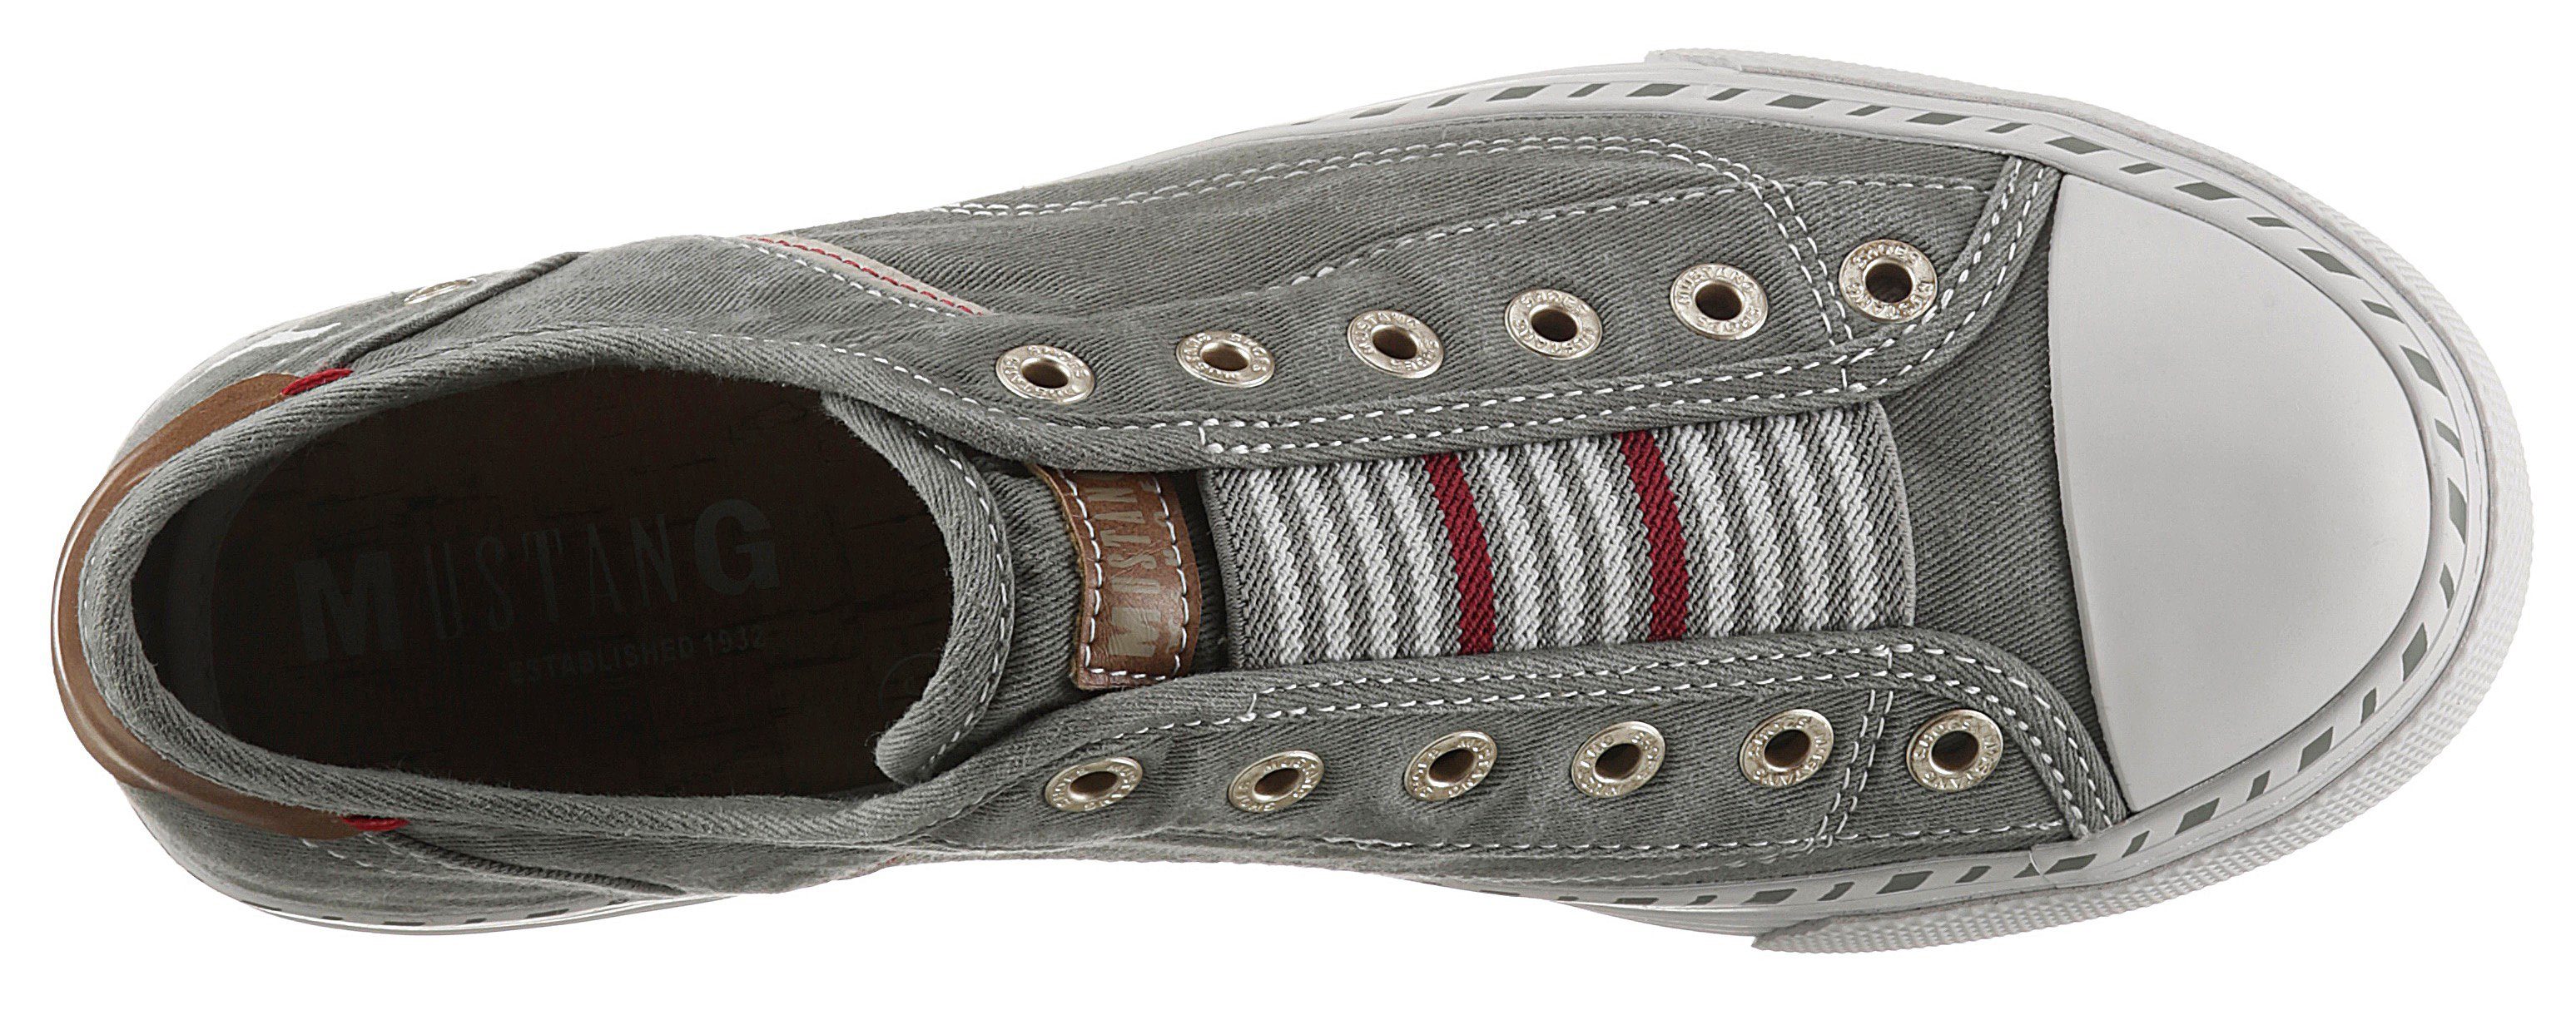 Shoes Sneaker graugrün praktischem mit Slip-On Mustang Gummizug